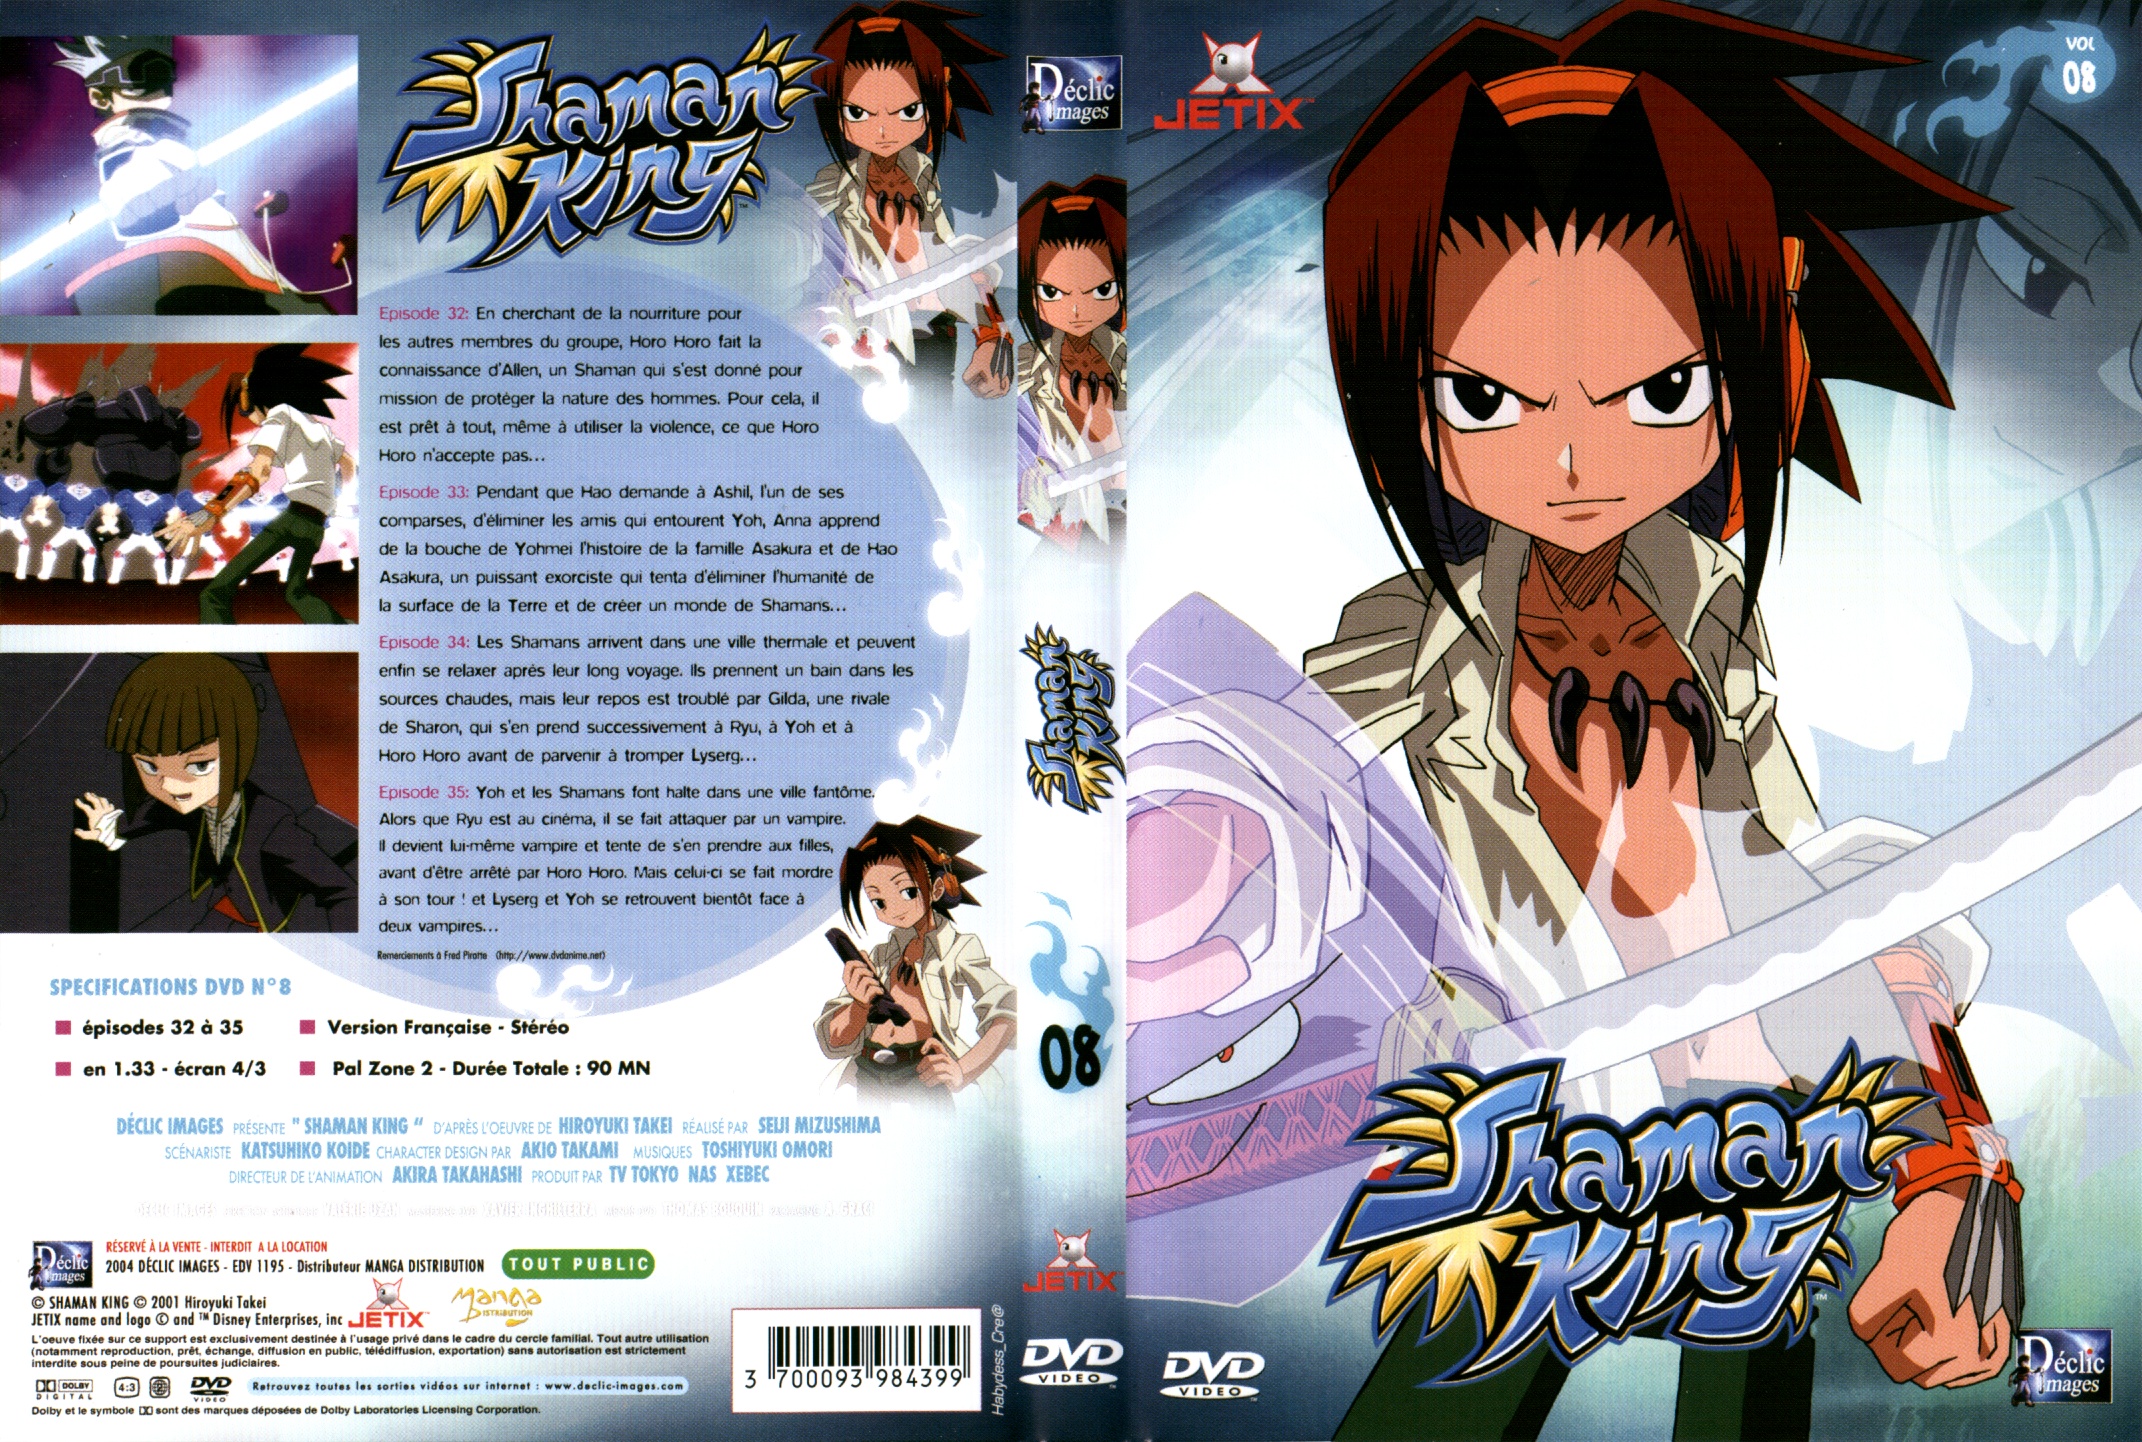 Jaquette DVD Shaman King vol 8